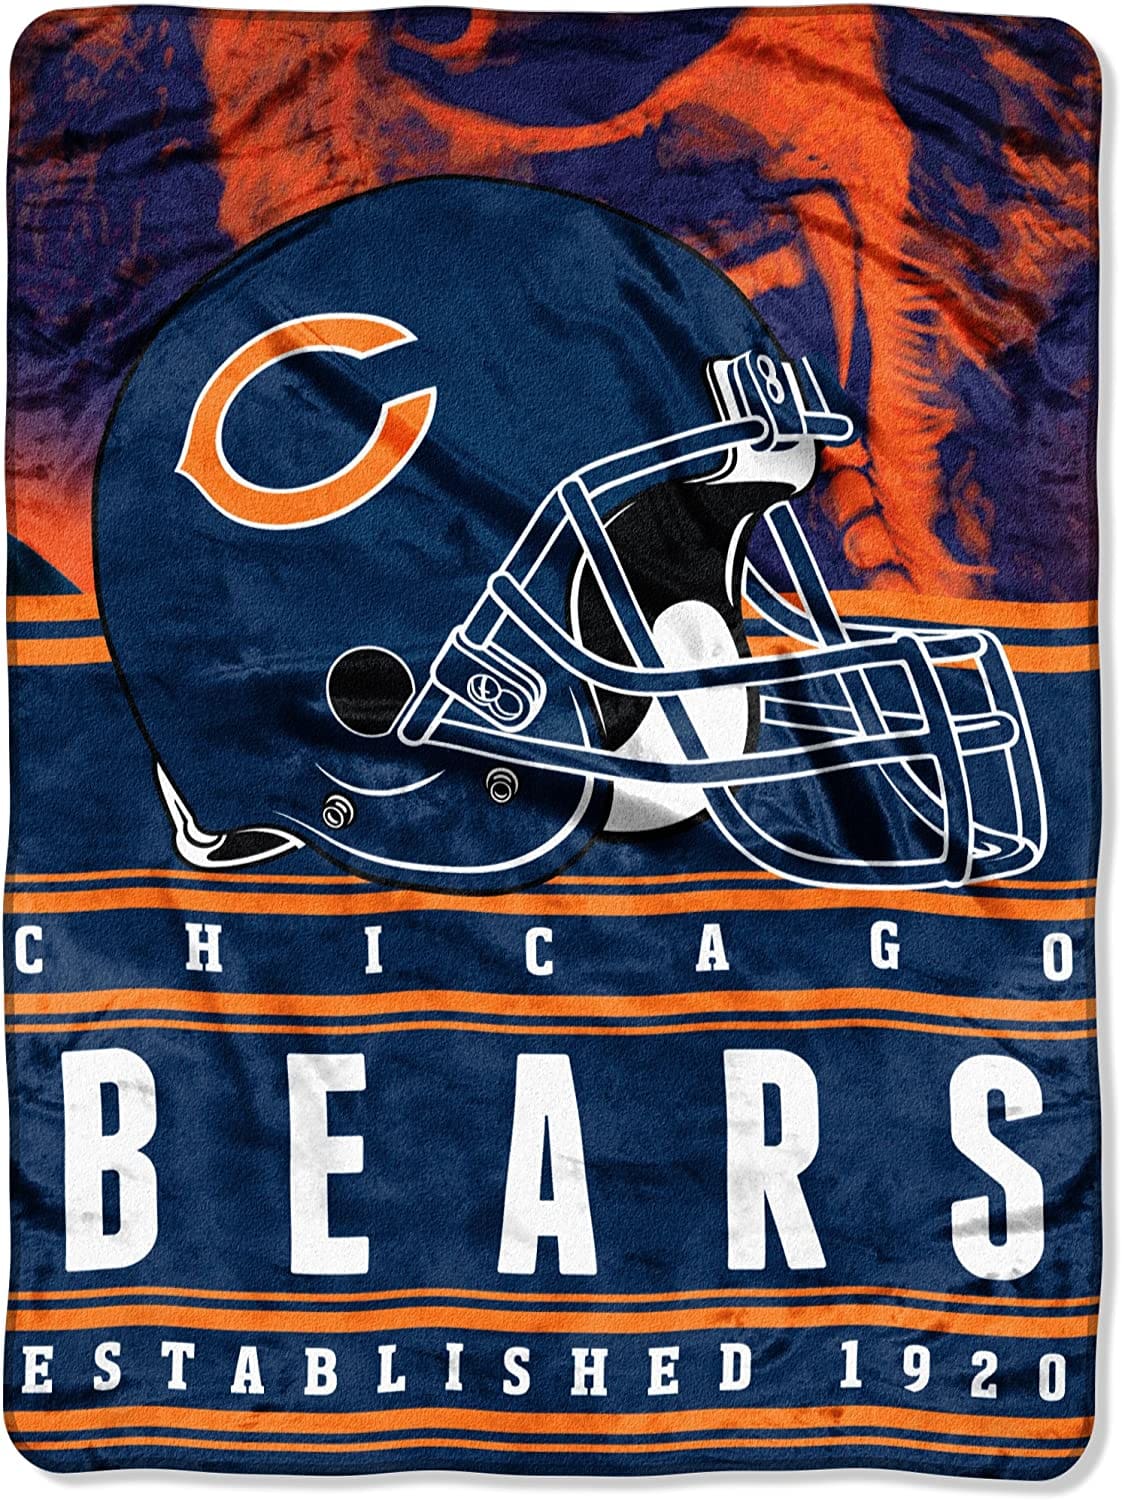 Nfl Chicago Bears Fleece Blanket